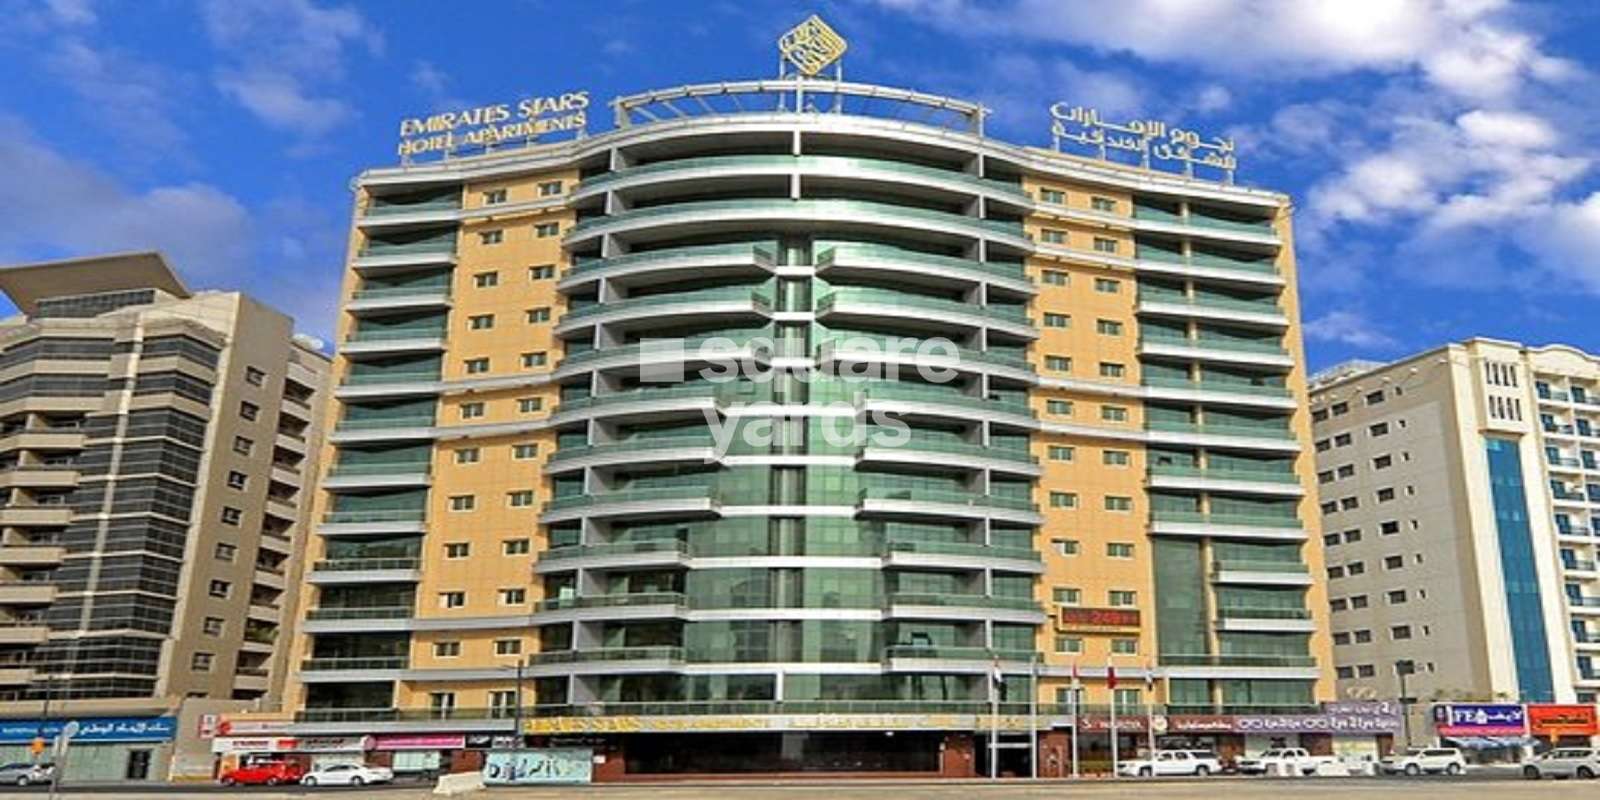 Emirates Stars Hotel Apartments Cover Image